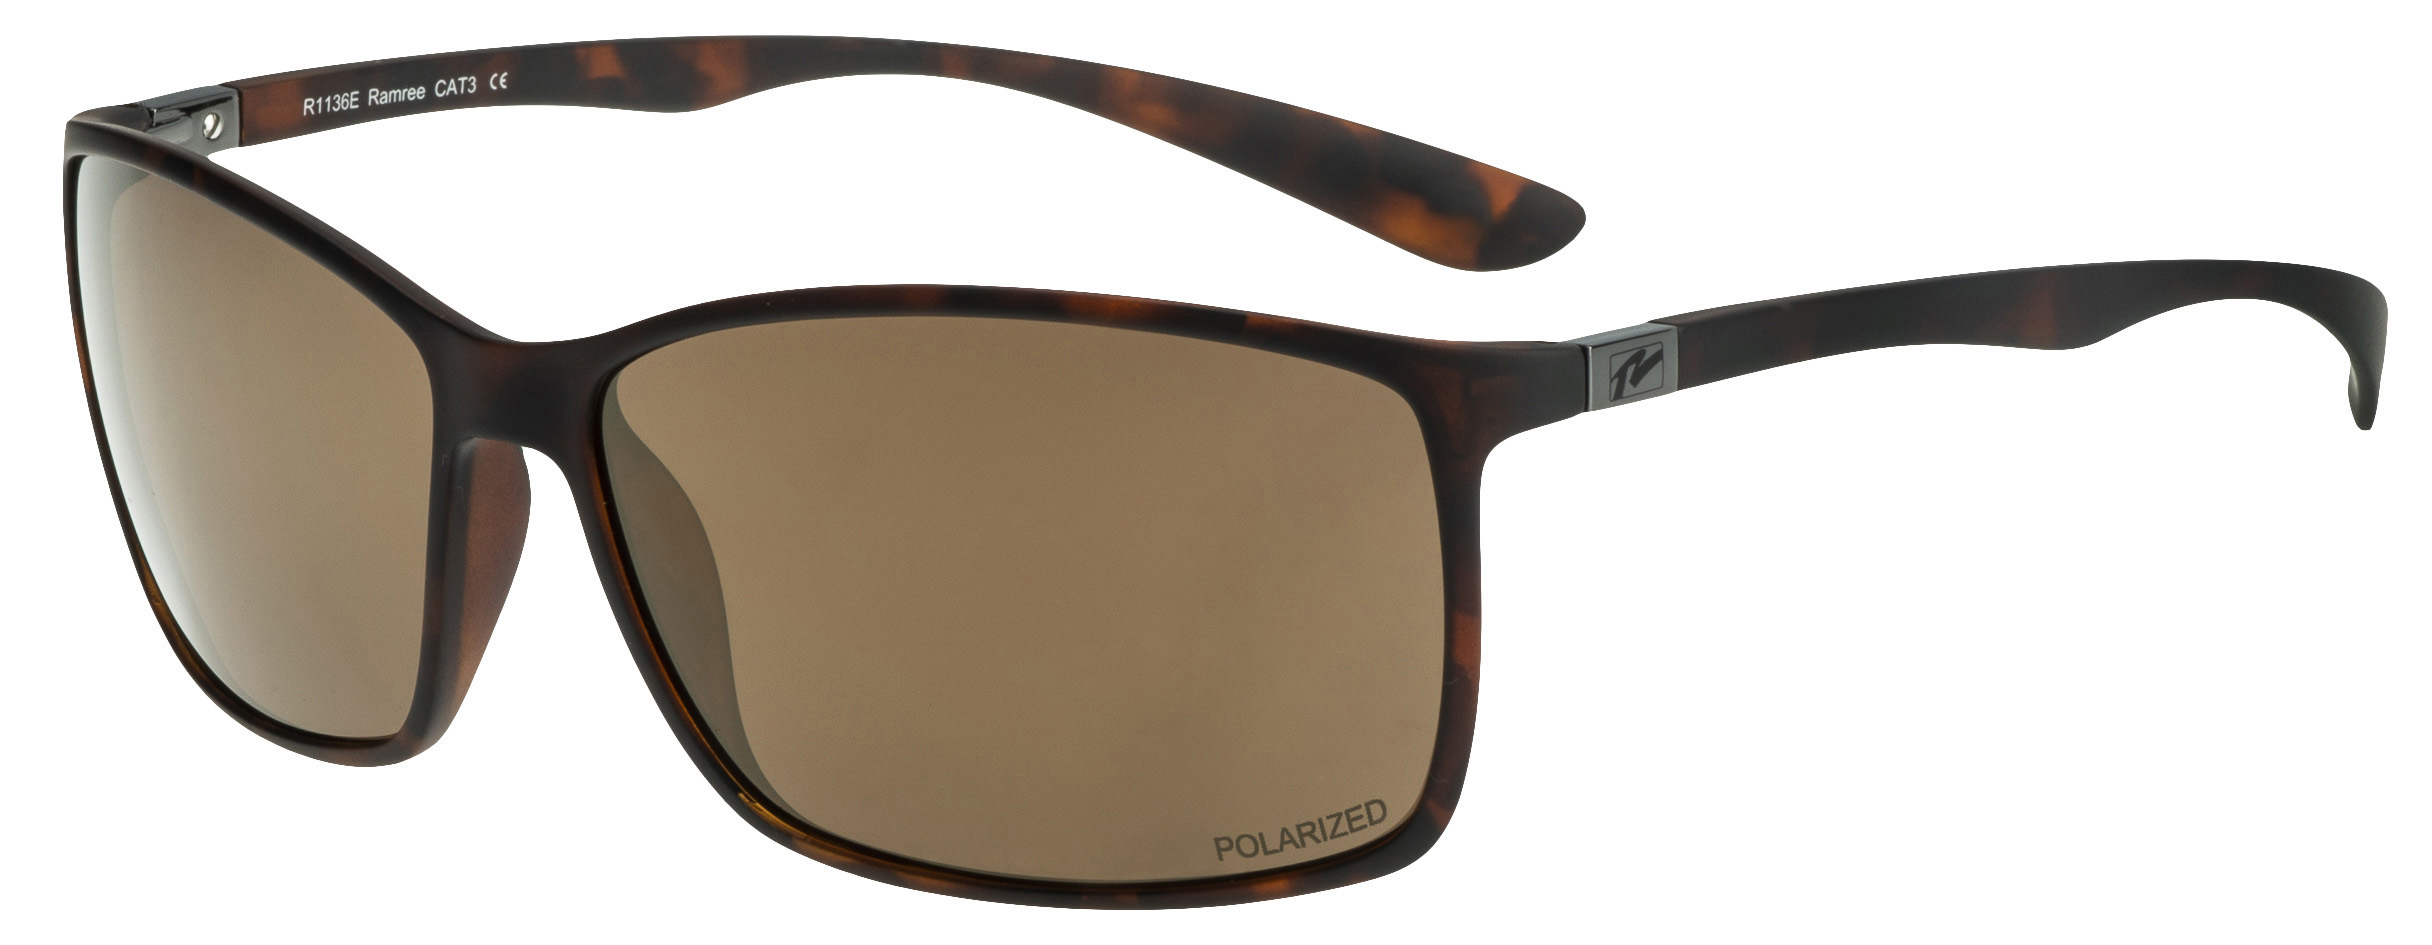 Polarized sunglasses  Relax Ramree R1136F Standard